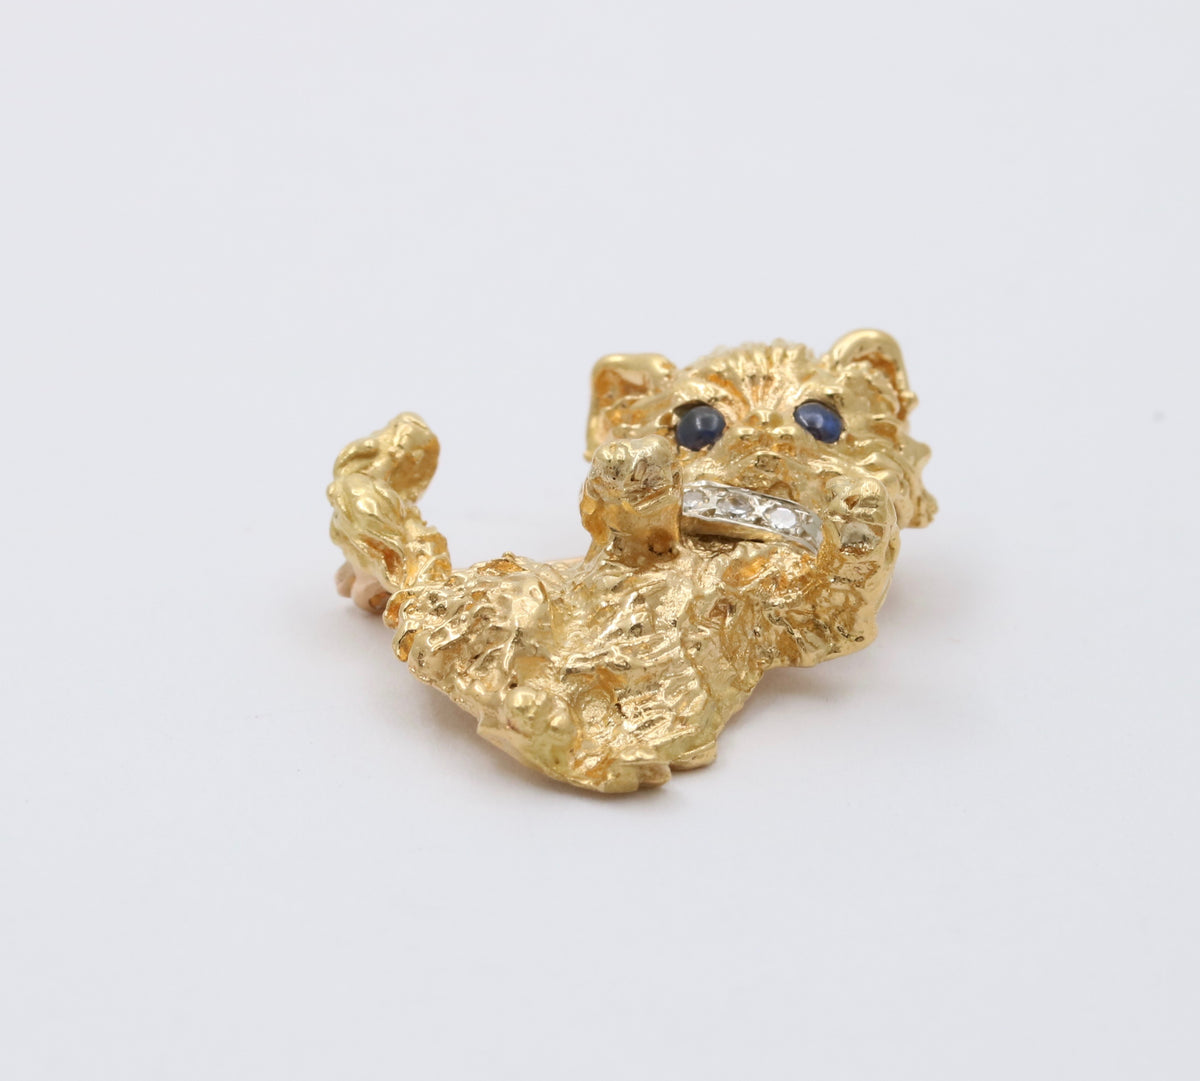 Vintage 18K Gold, Diamond, and Sapphire Standing Kitty Cat Brooch, Kitten Pin